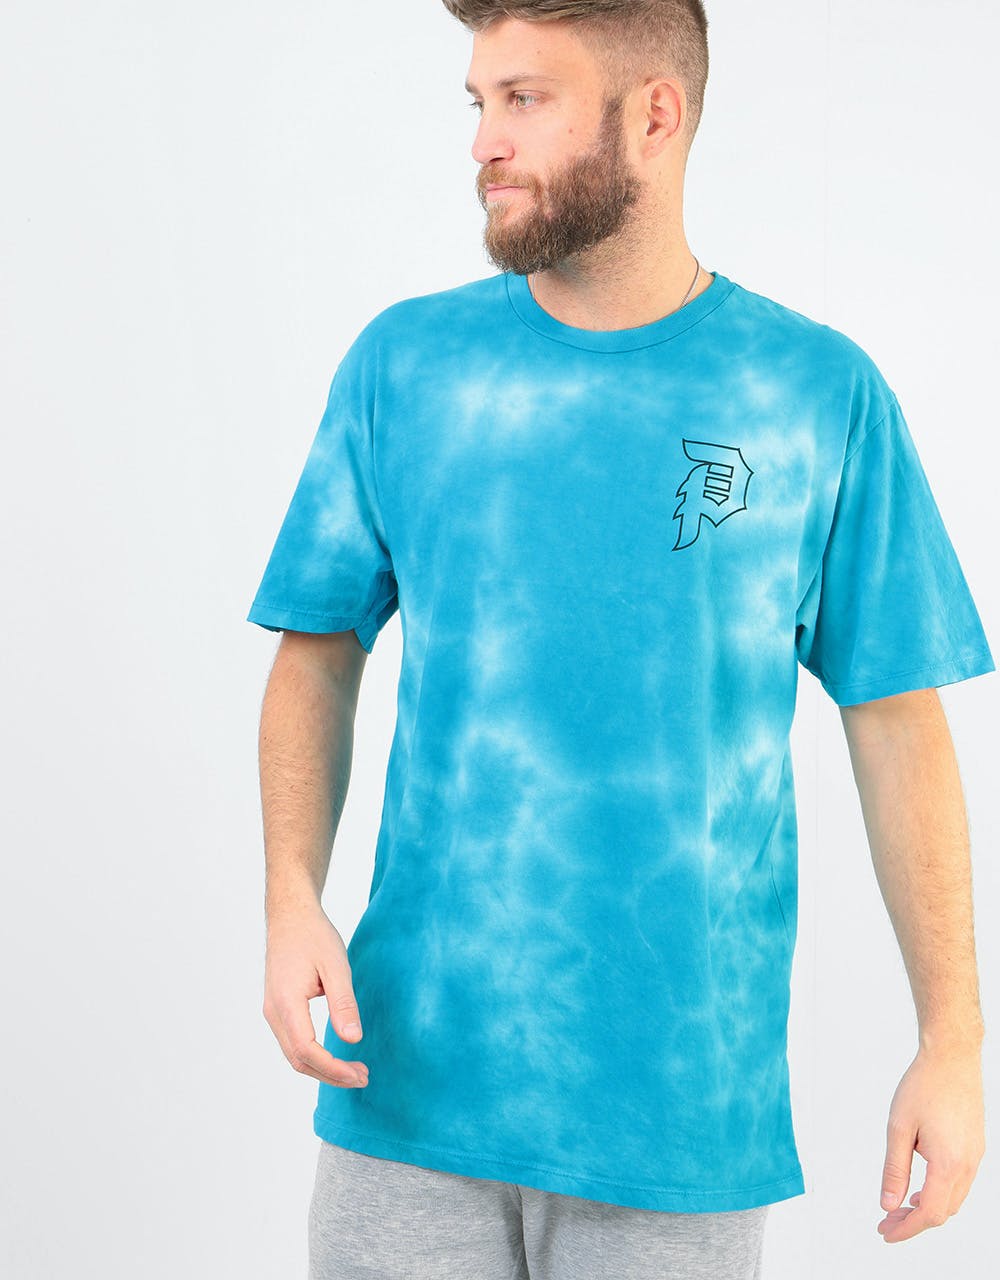 Primitive x Rick & Morty Morty Outline Tie-Dye T-Shirt - Aqua Tie Dye